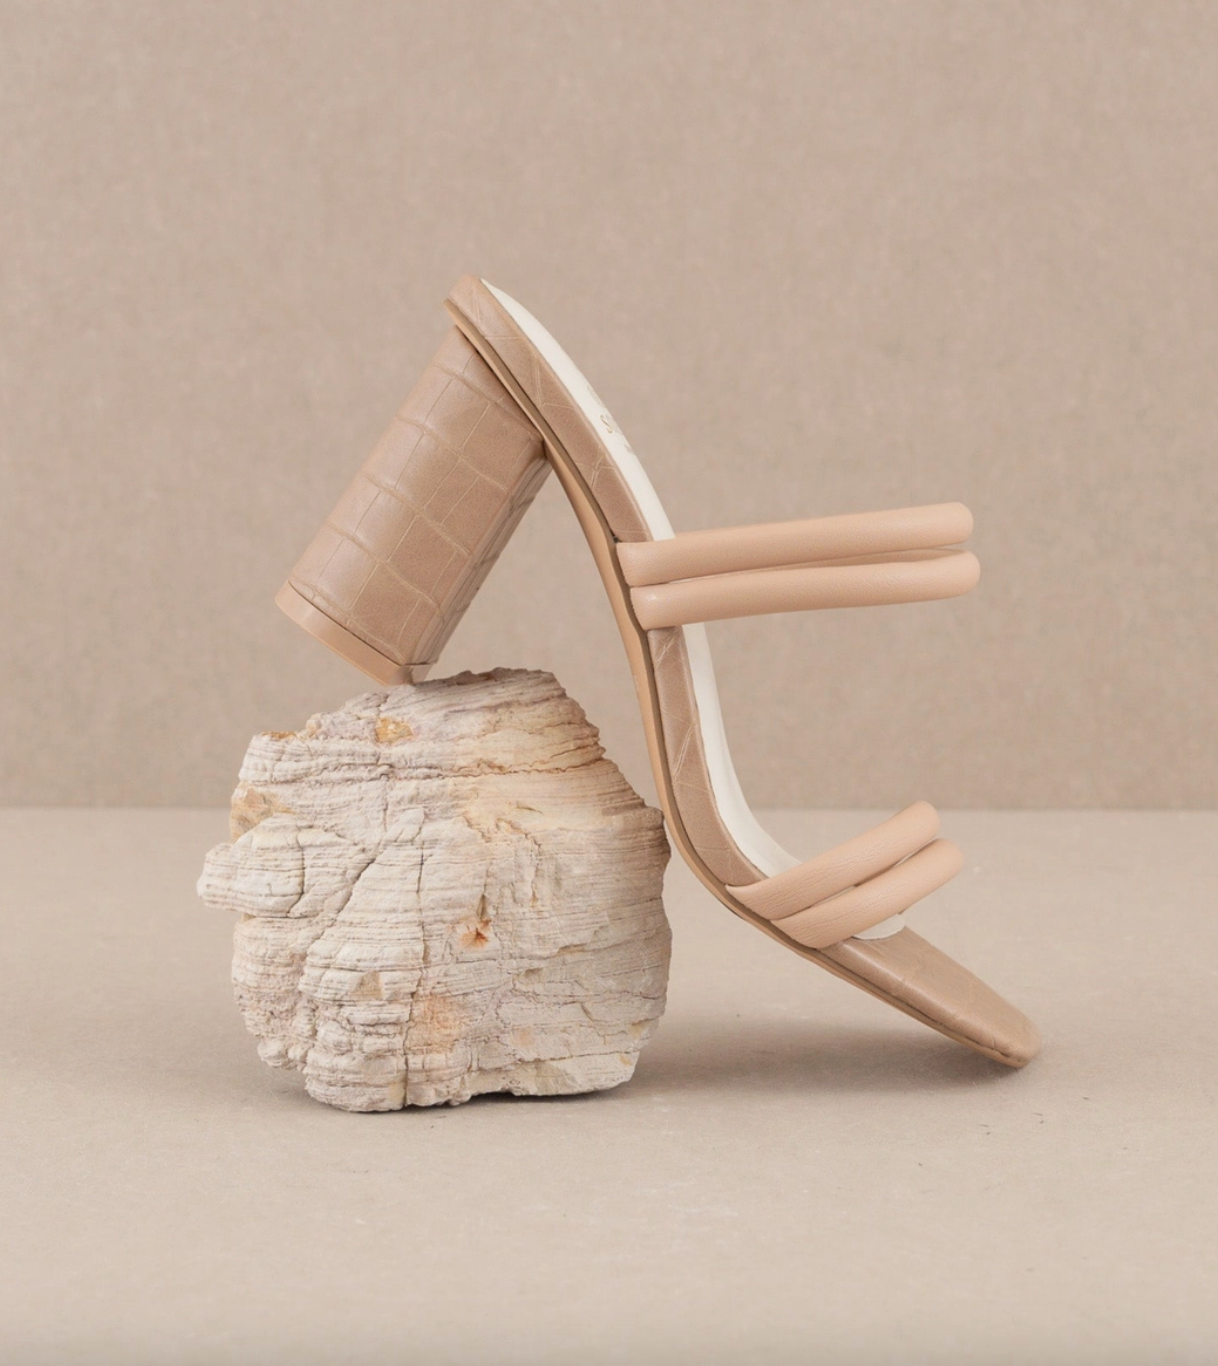 the angela strappy block heel